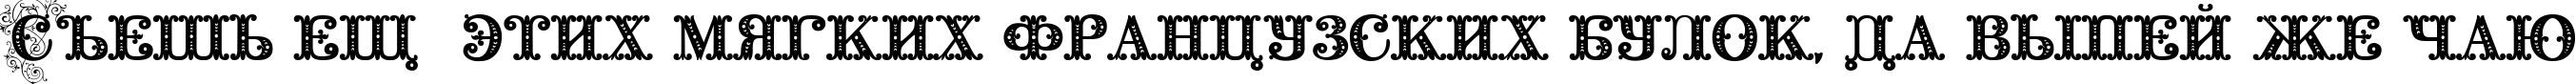 Пример написания шрифтом Barocco Floral Initial текста на русском